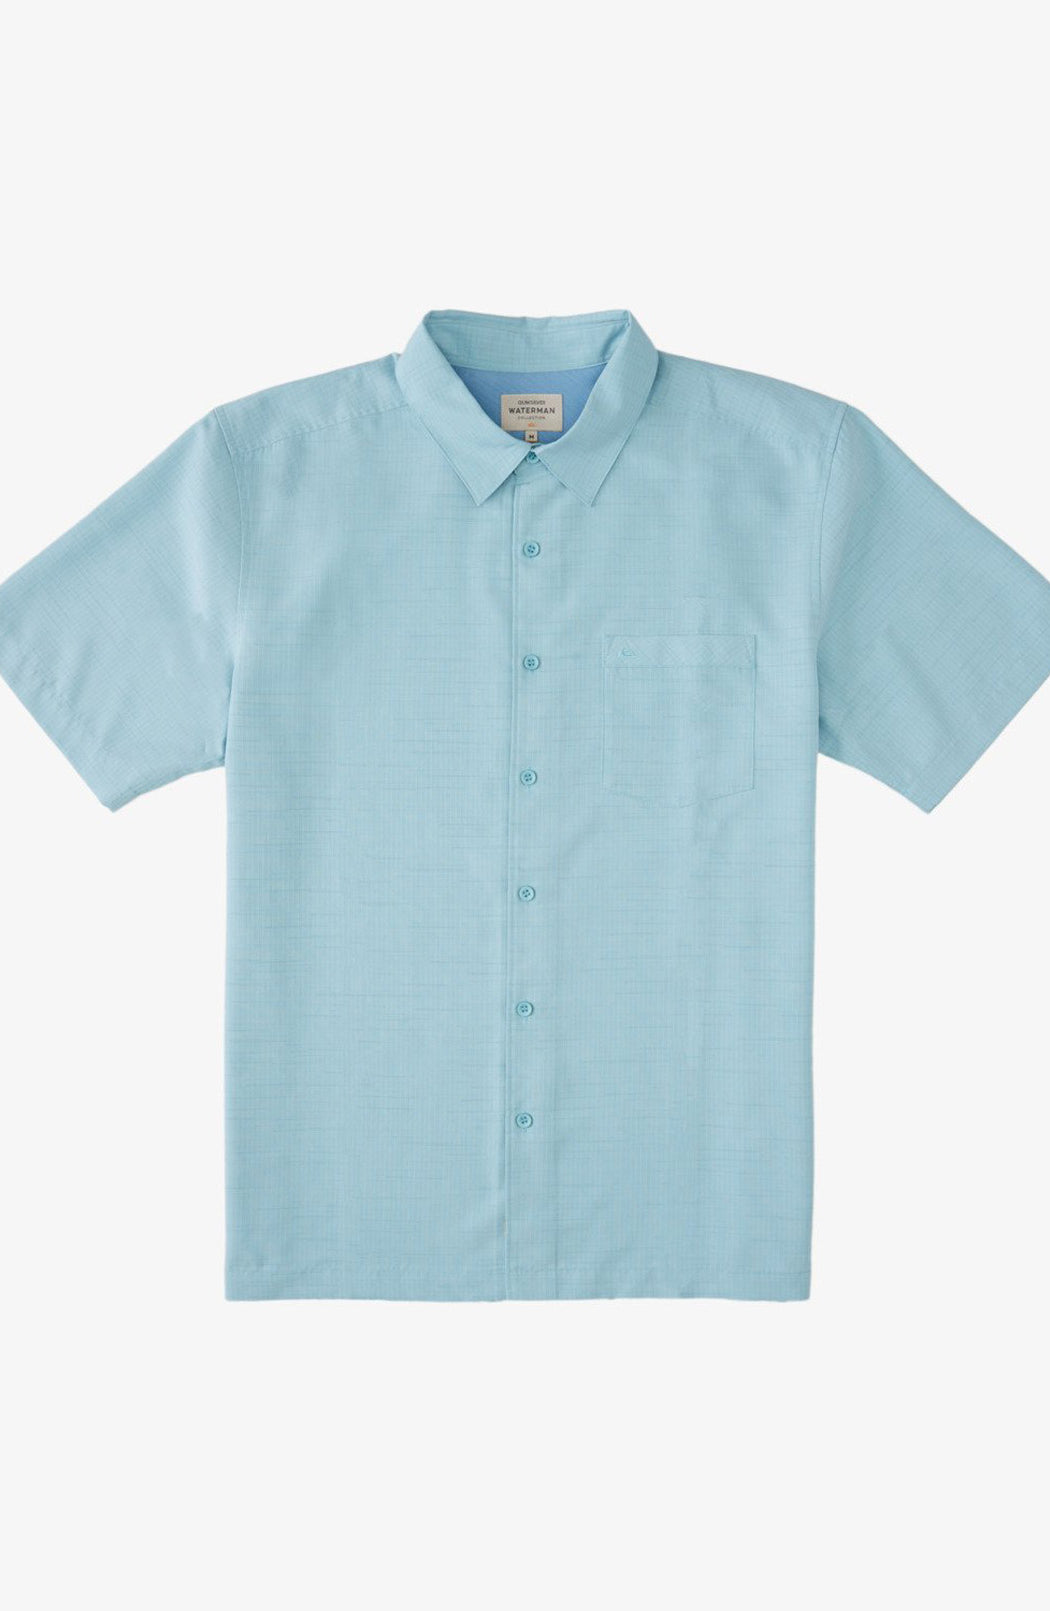 Quiksliver: Waterman Centinela Premium Shirt